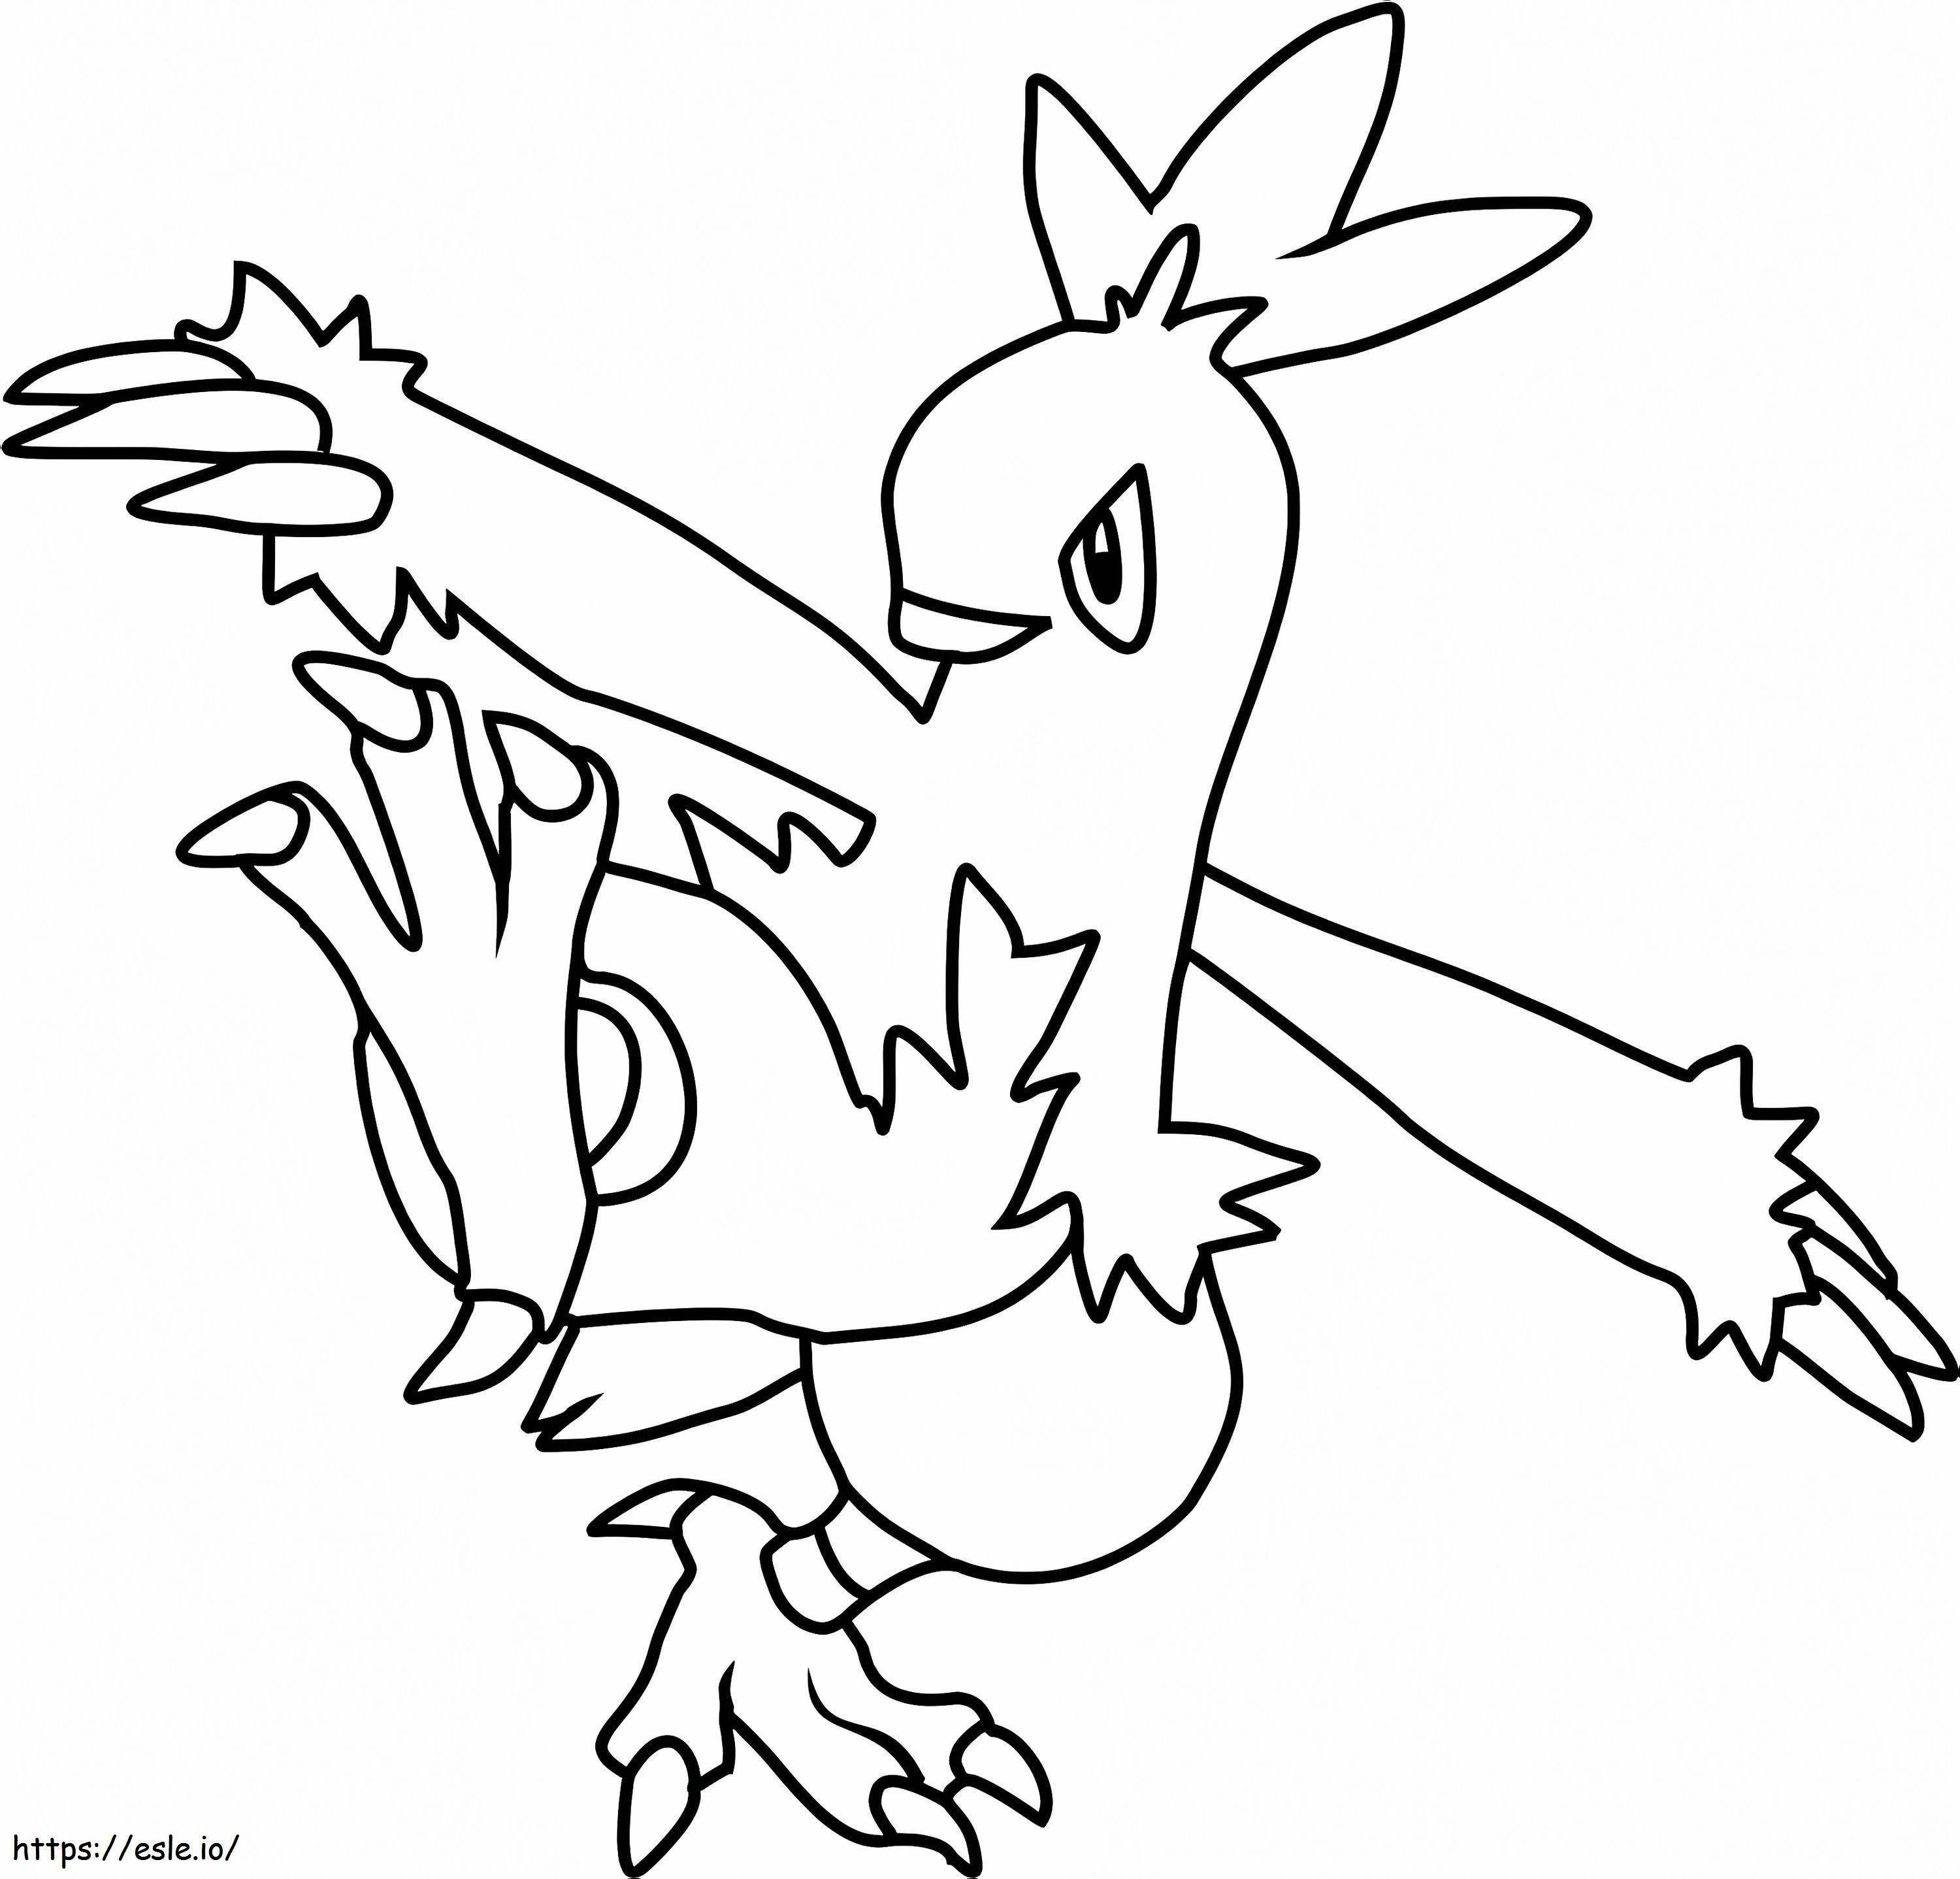 Combusken-Pokémon ausmalbilder